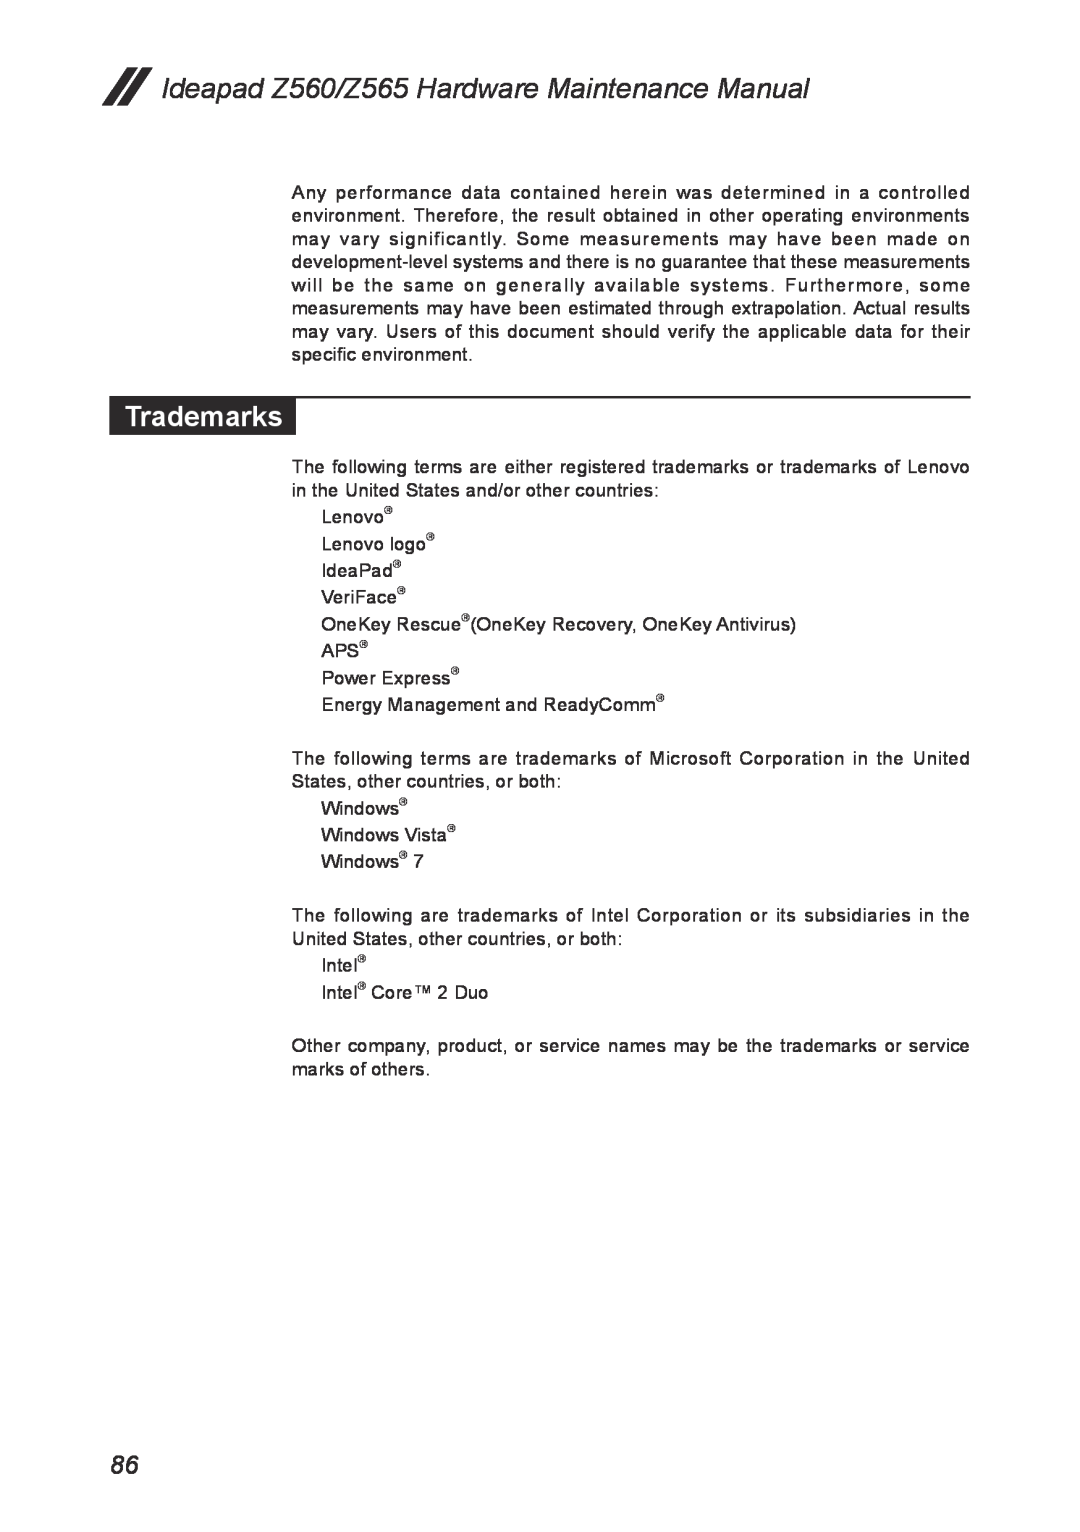 Lenovo manual Trademarks, Ideapad Z560/Z565 Hardware Maintenance Manual 